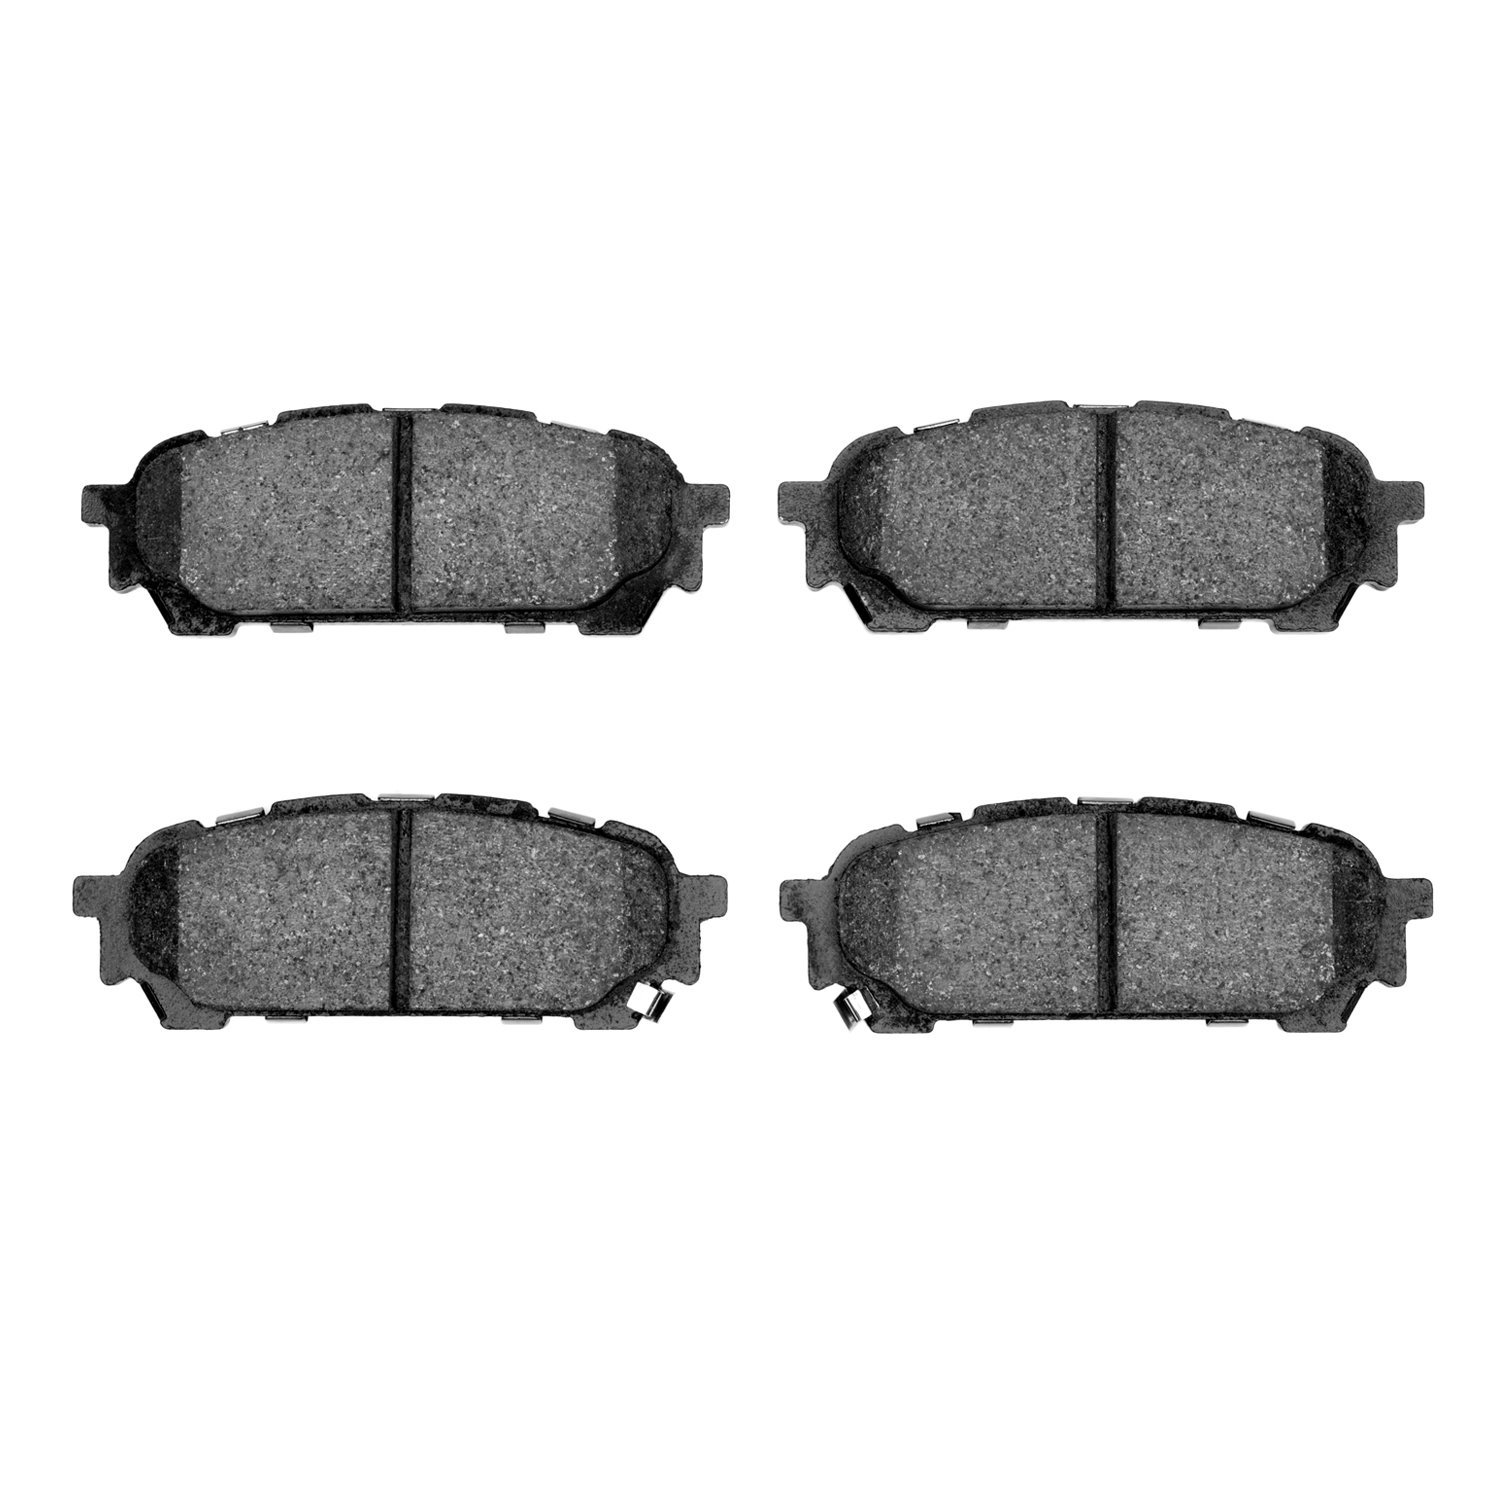 Ceramic Brake Pads, 2003-2008 Fits Multiple Makes/Models, Position: Rear